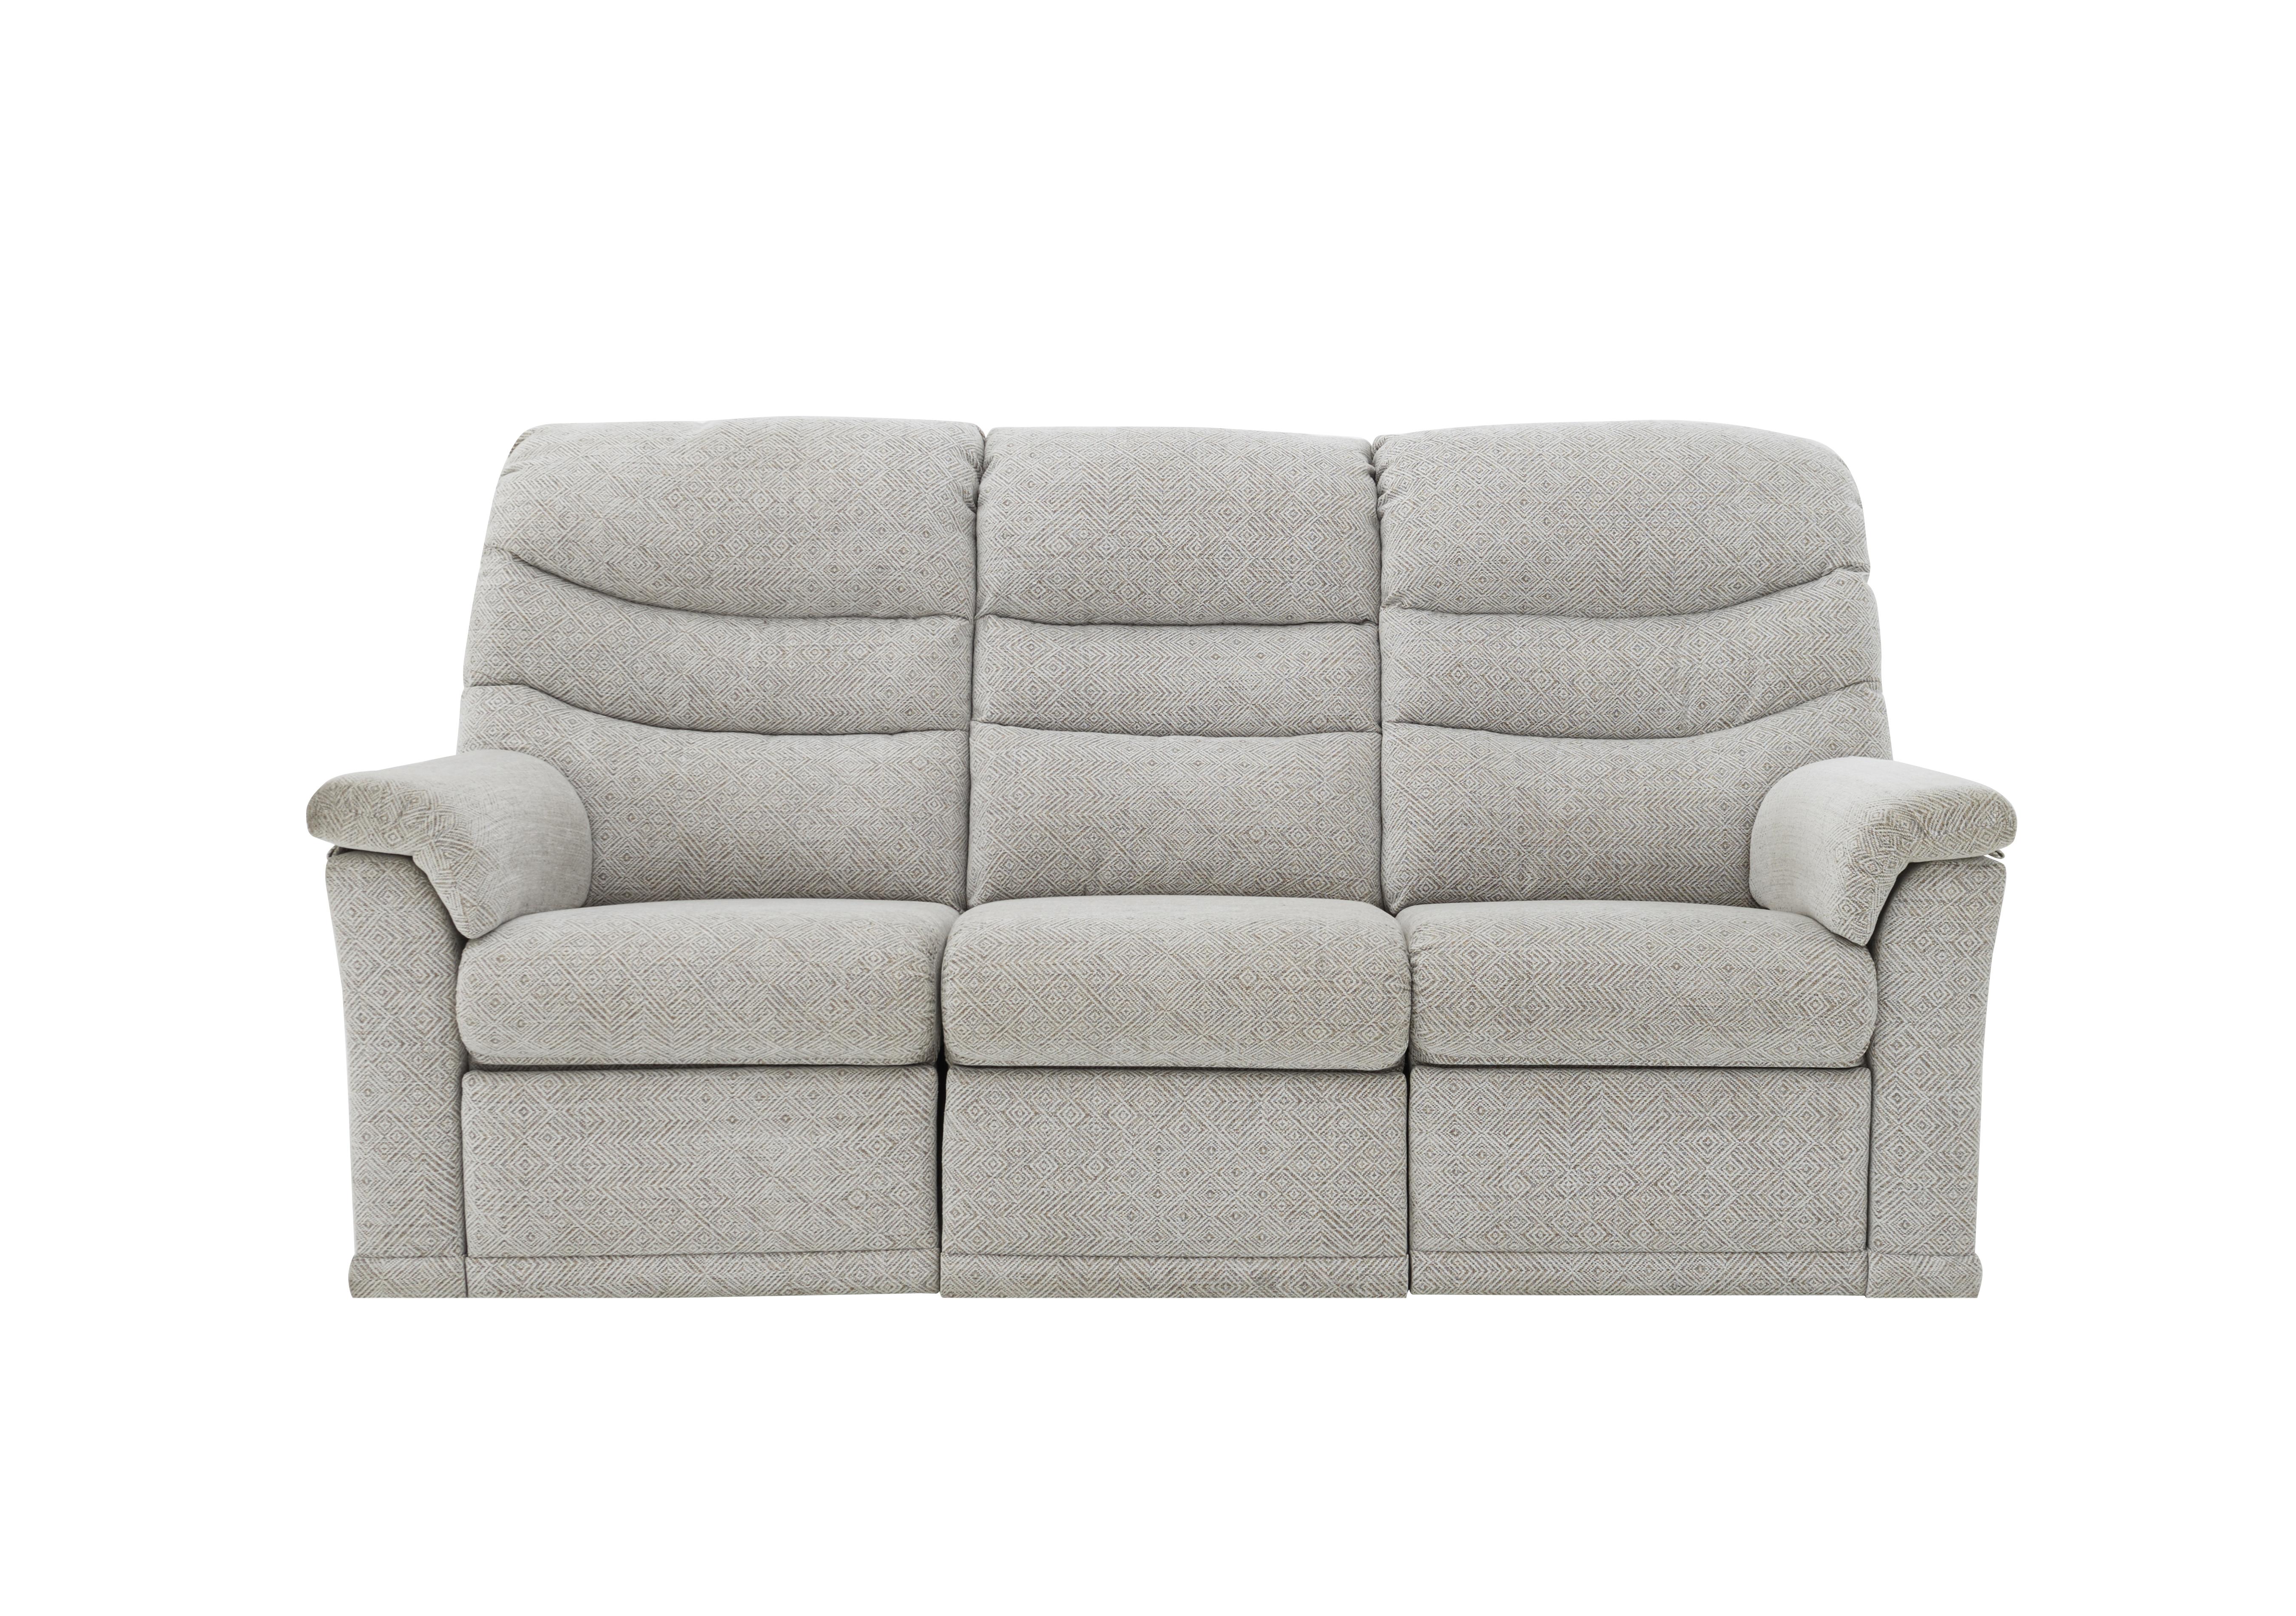 Malvern 3 Seater Fabric Sofa in B010 Nebular Pebble on Furniture Village